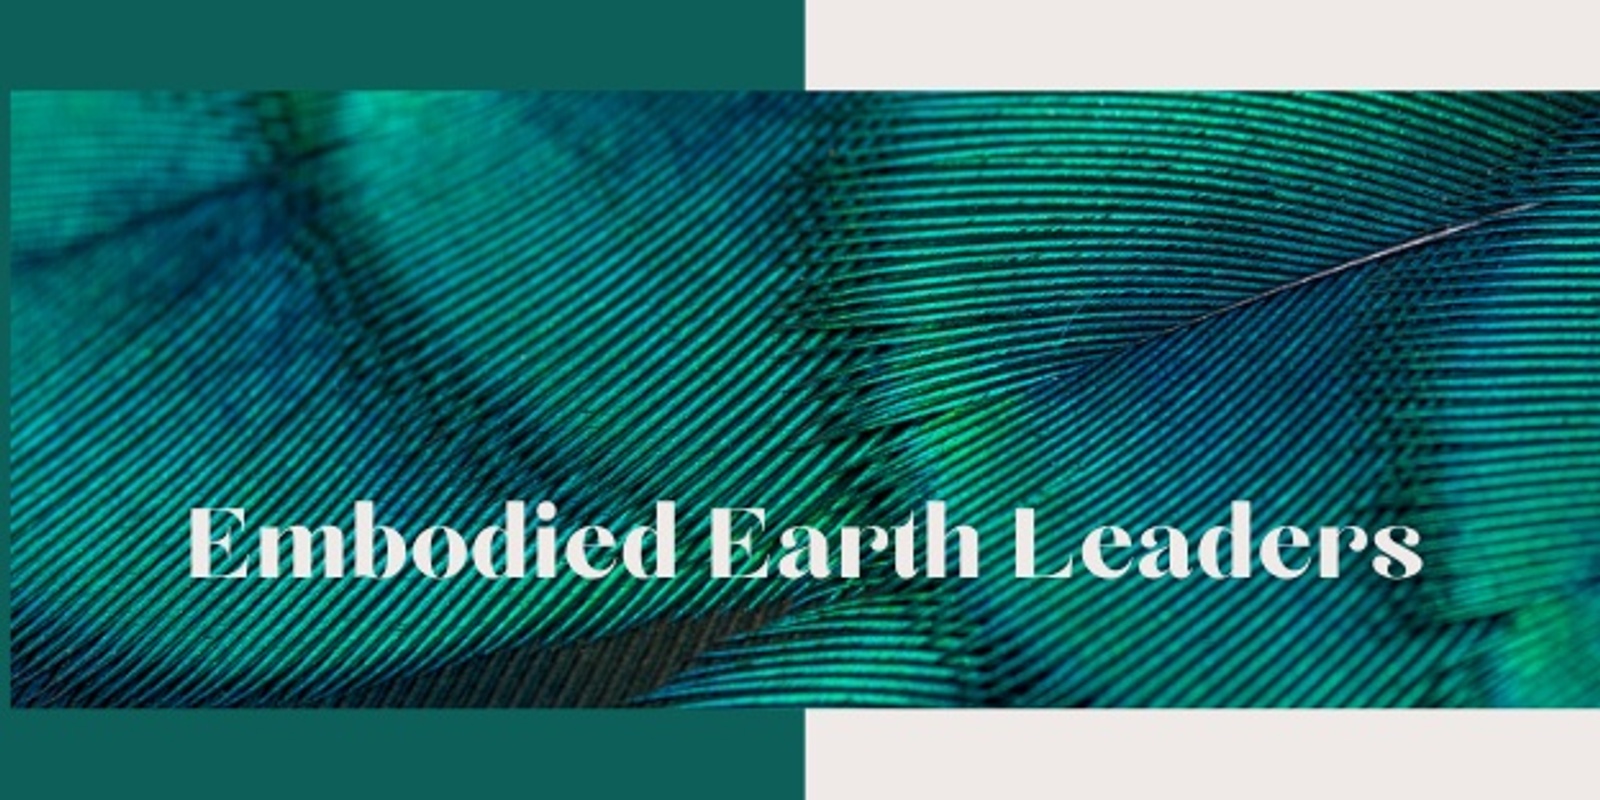 Embodied Earth Leadership Training